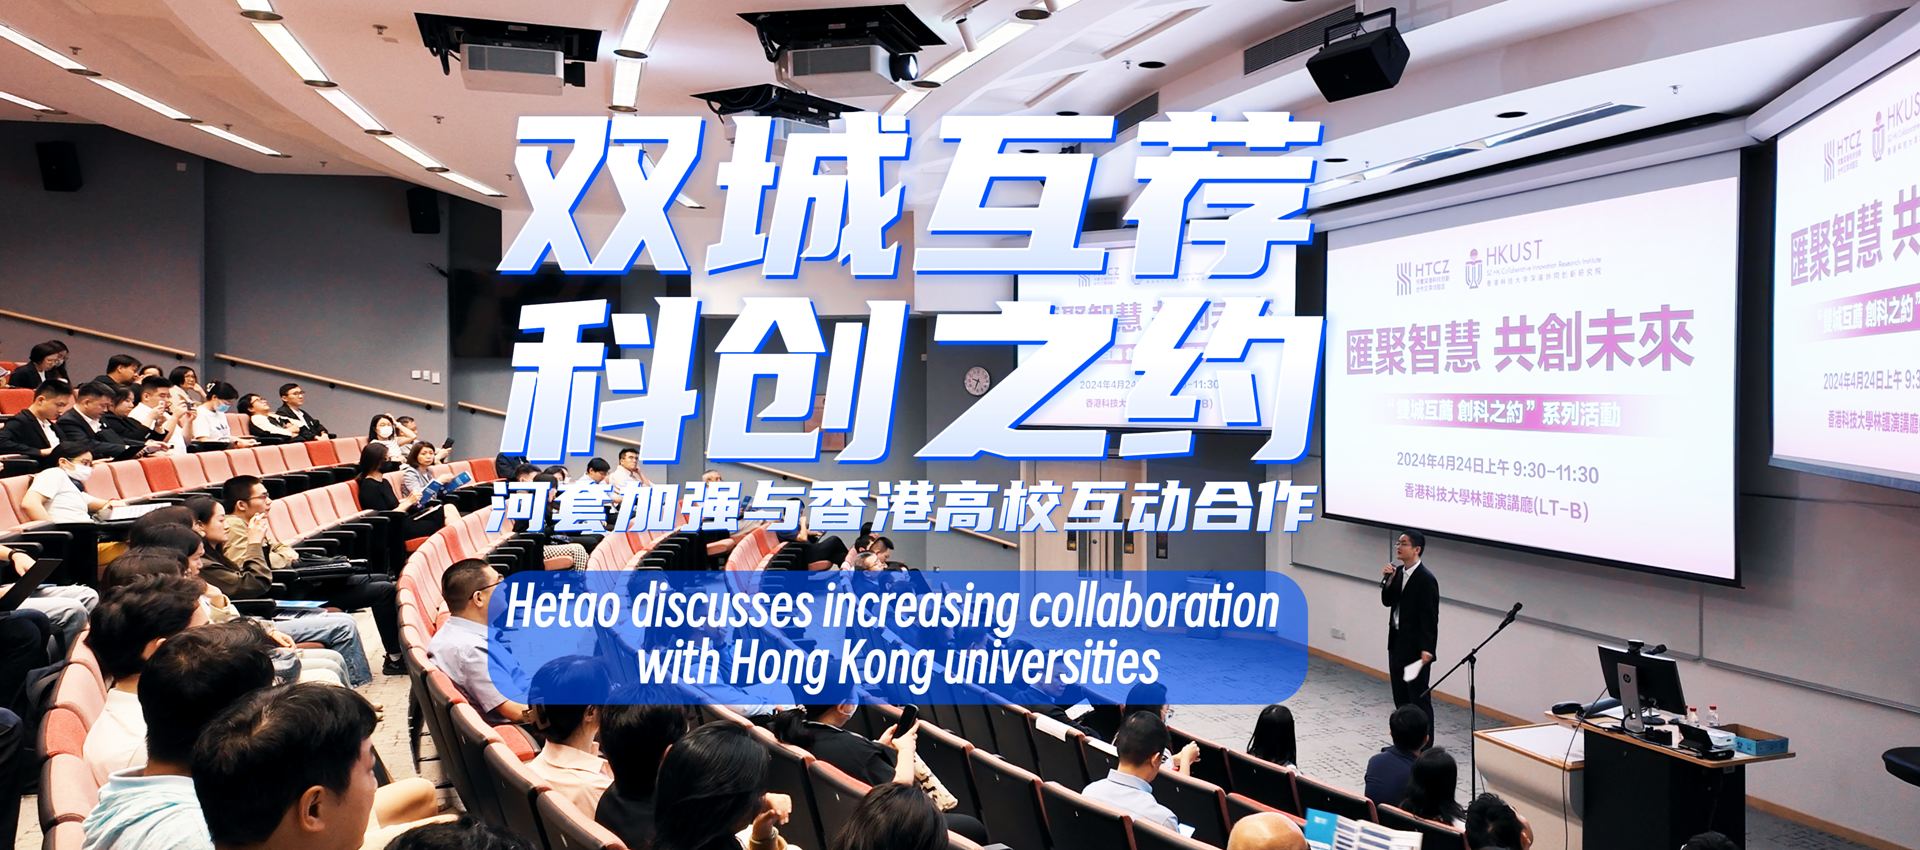 Hetao discusses increasing collaboration with Hong Kong universities